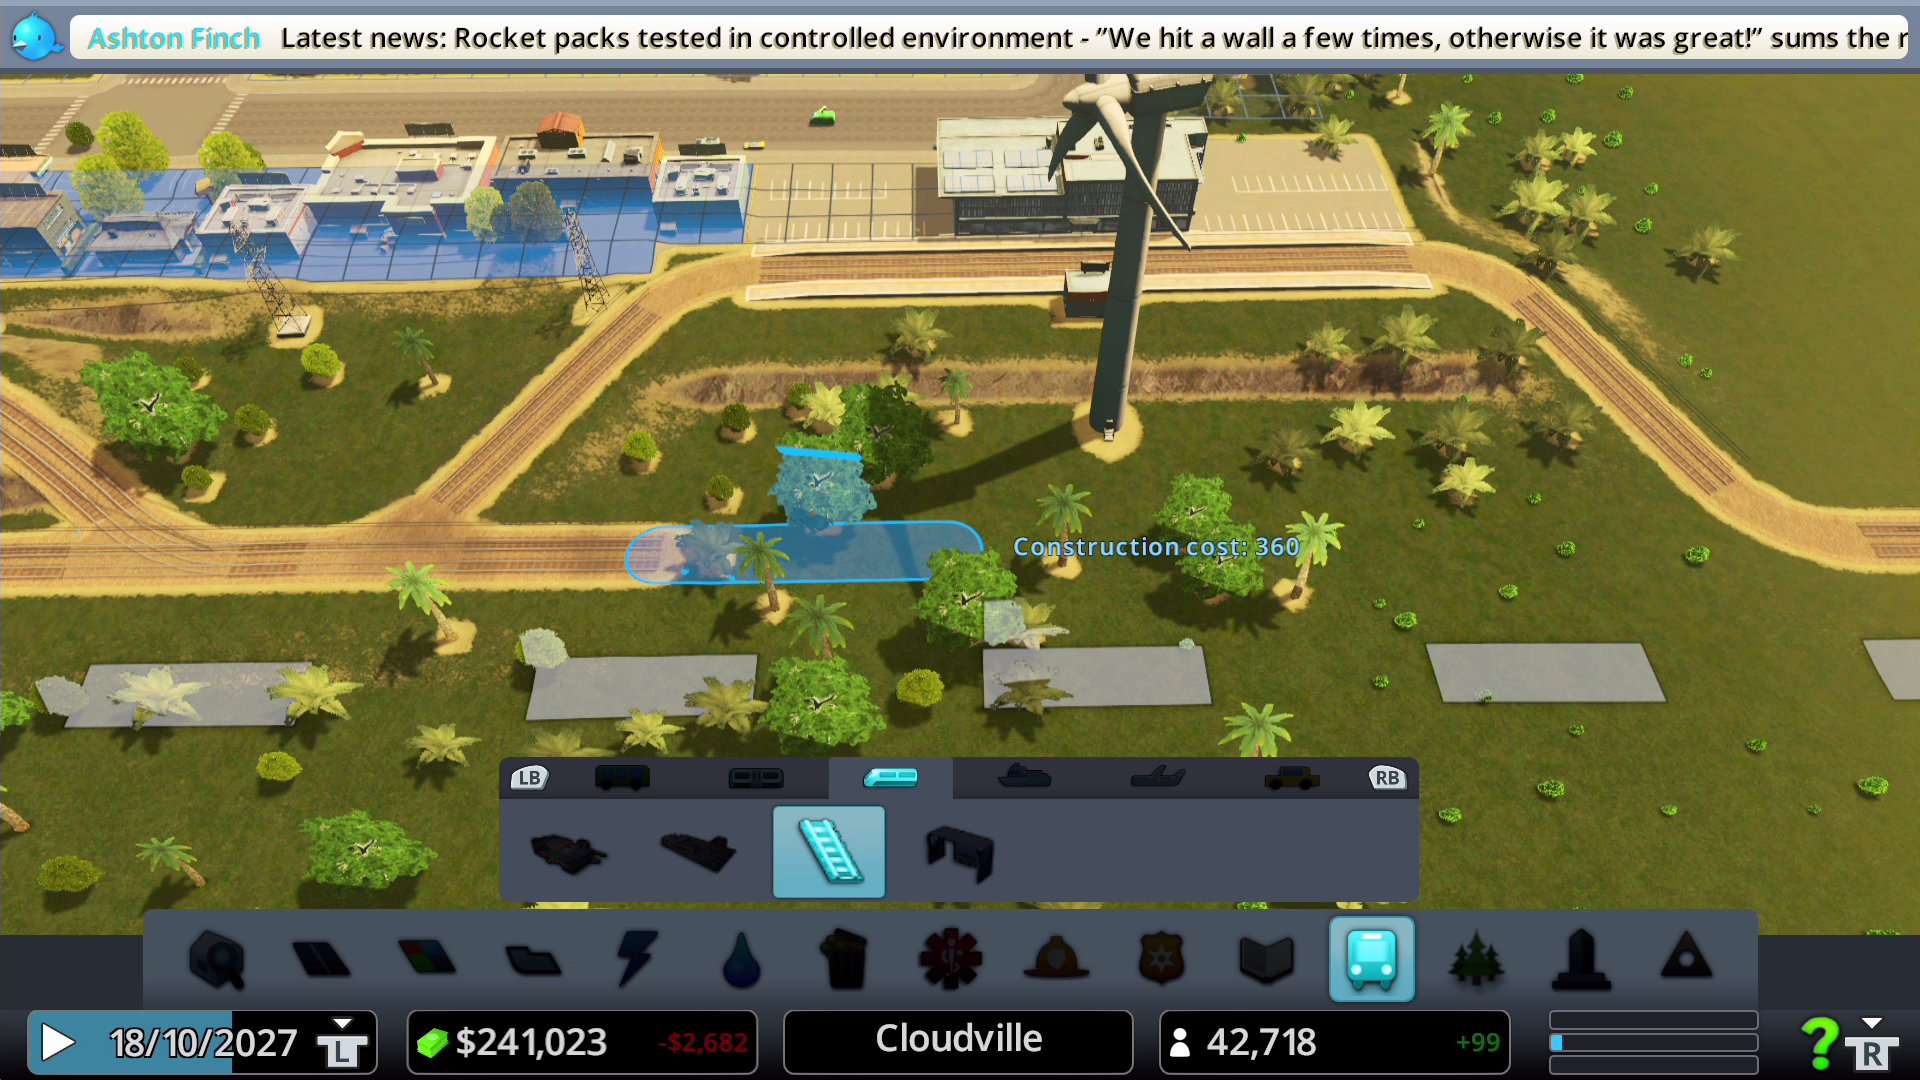 Cities Skylines Screenshot